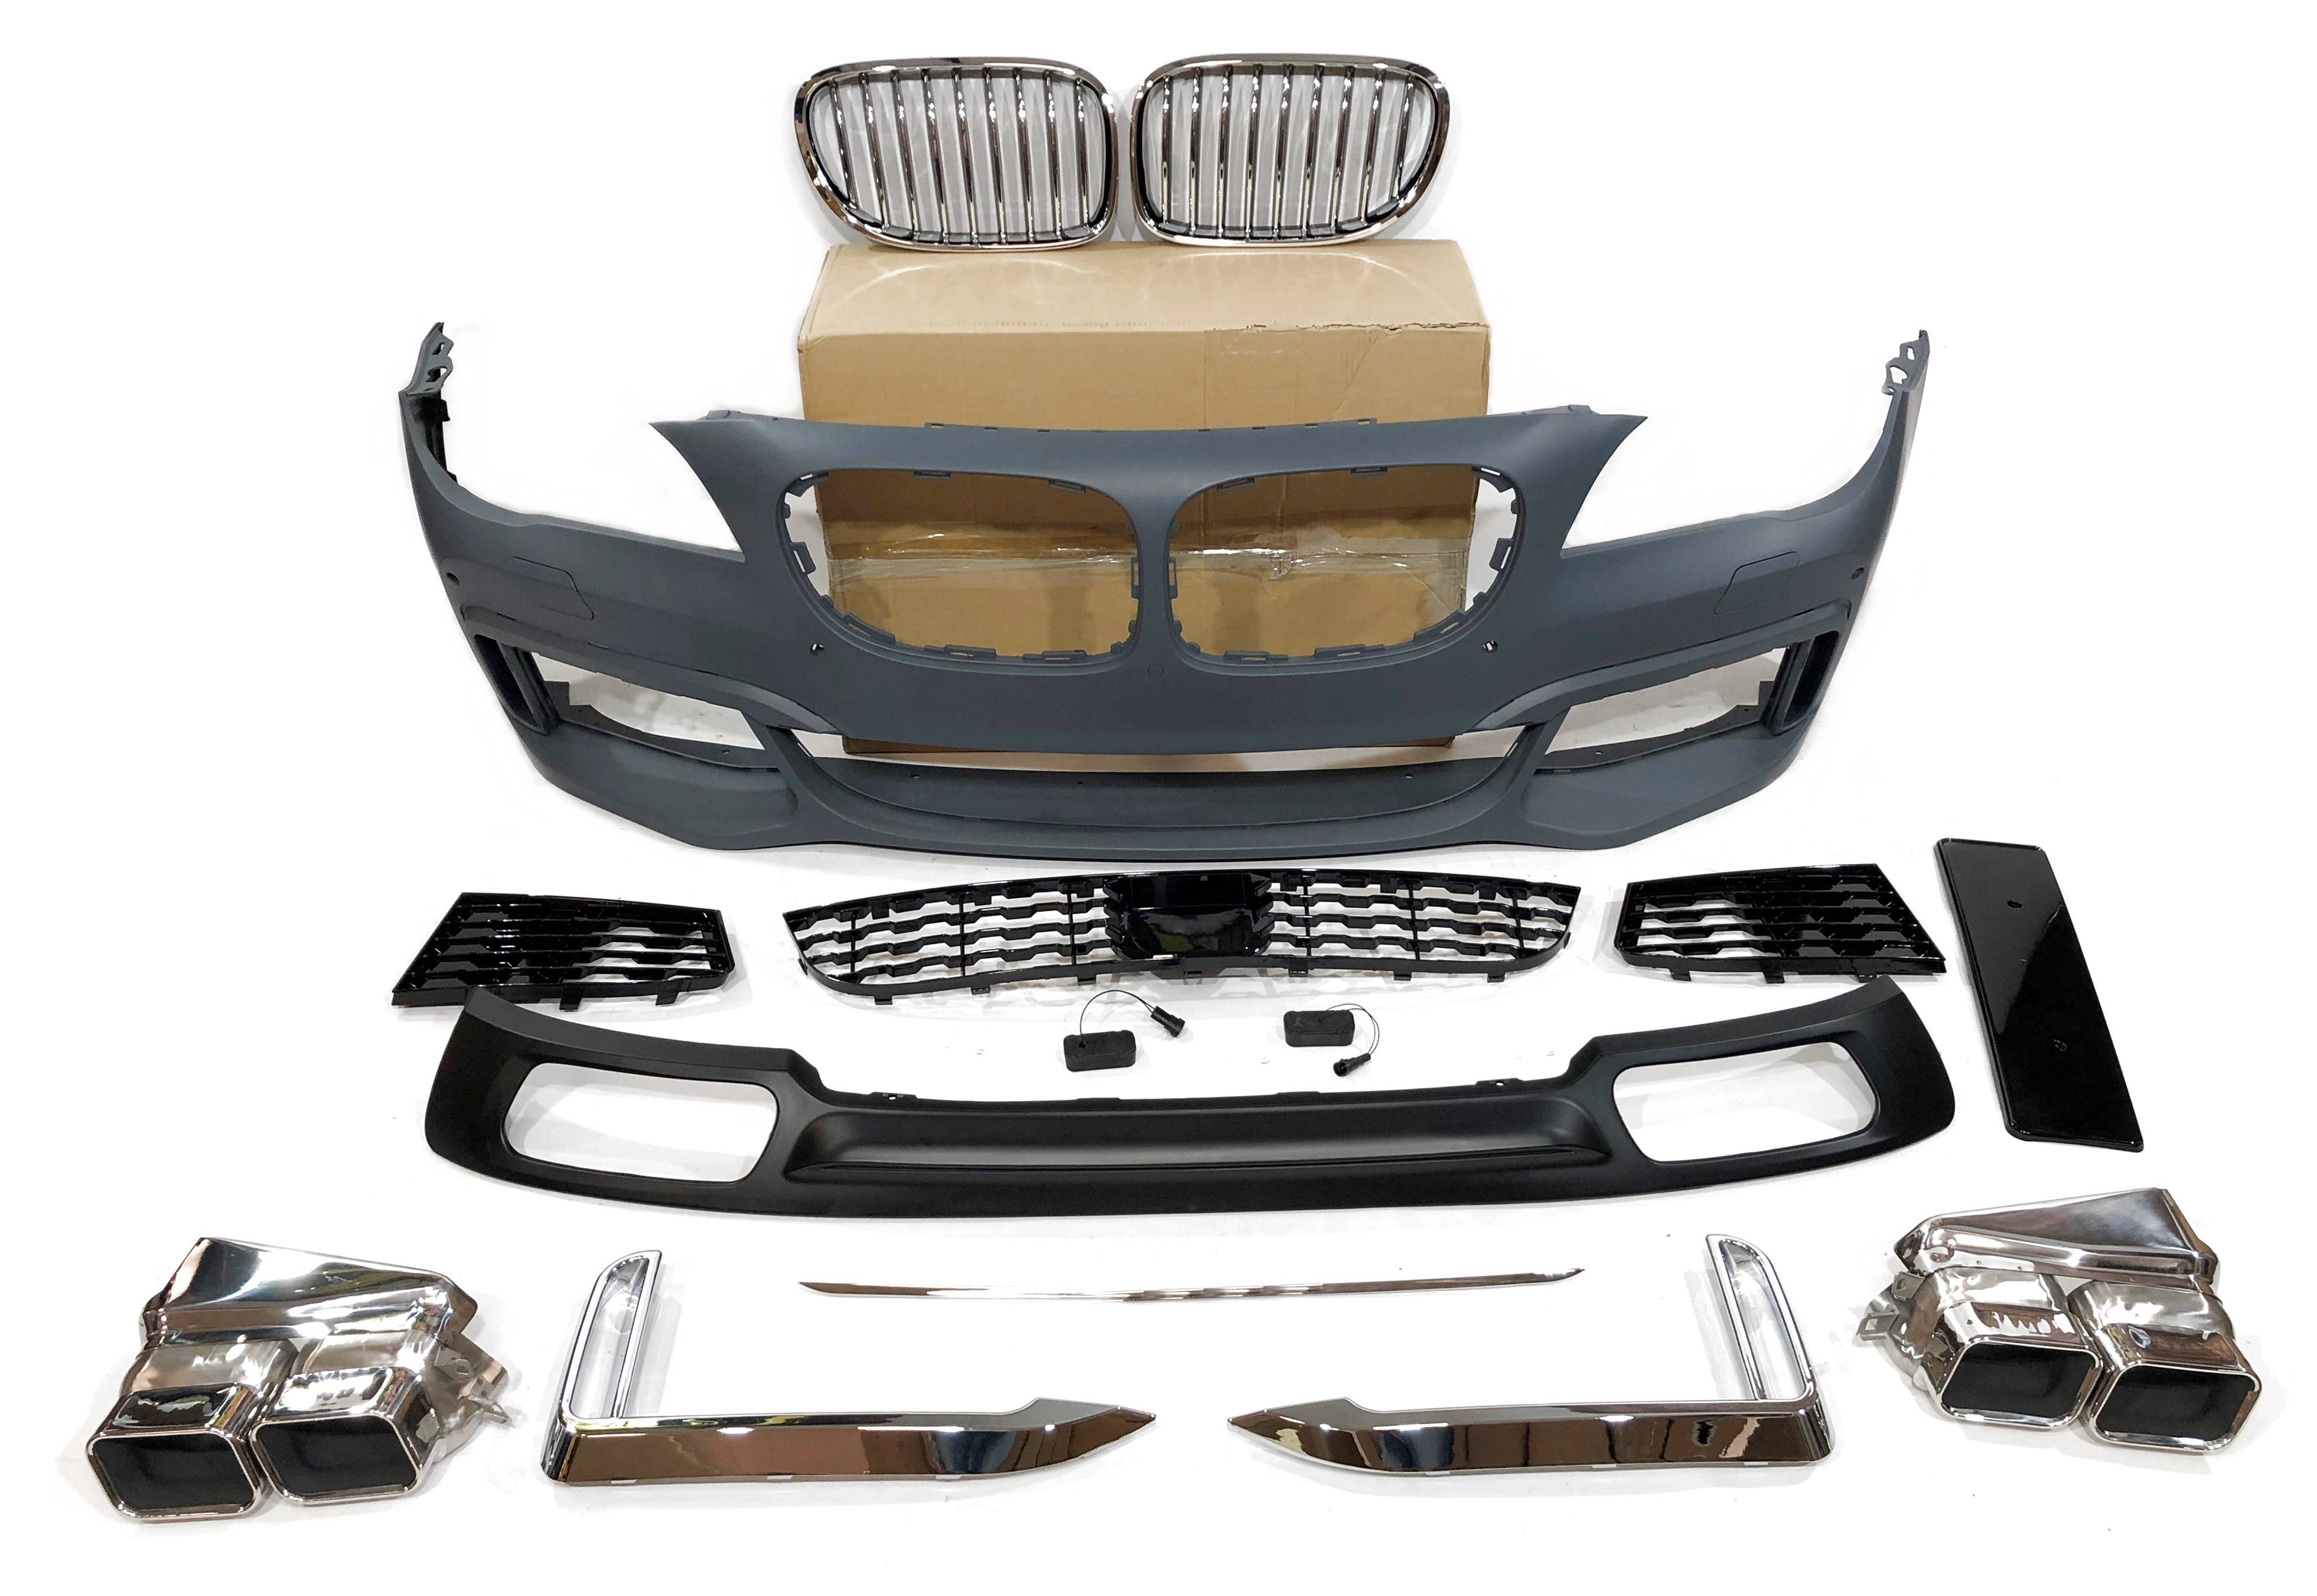 Body Kit BMW G31 Look M-Tech - Tuning Carbon Hoods